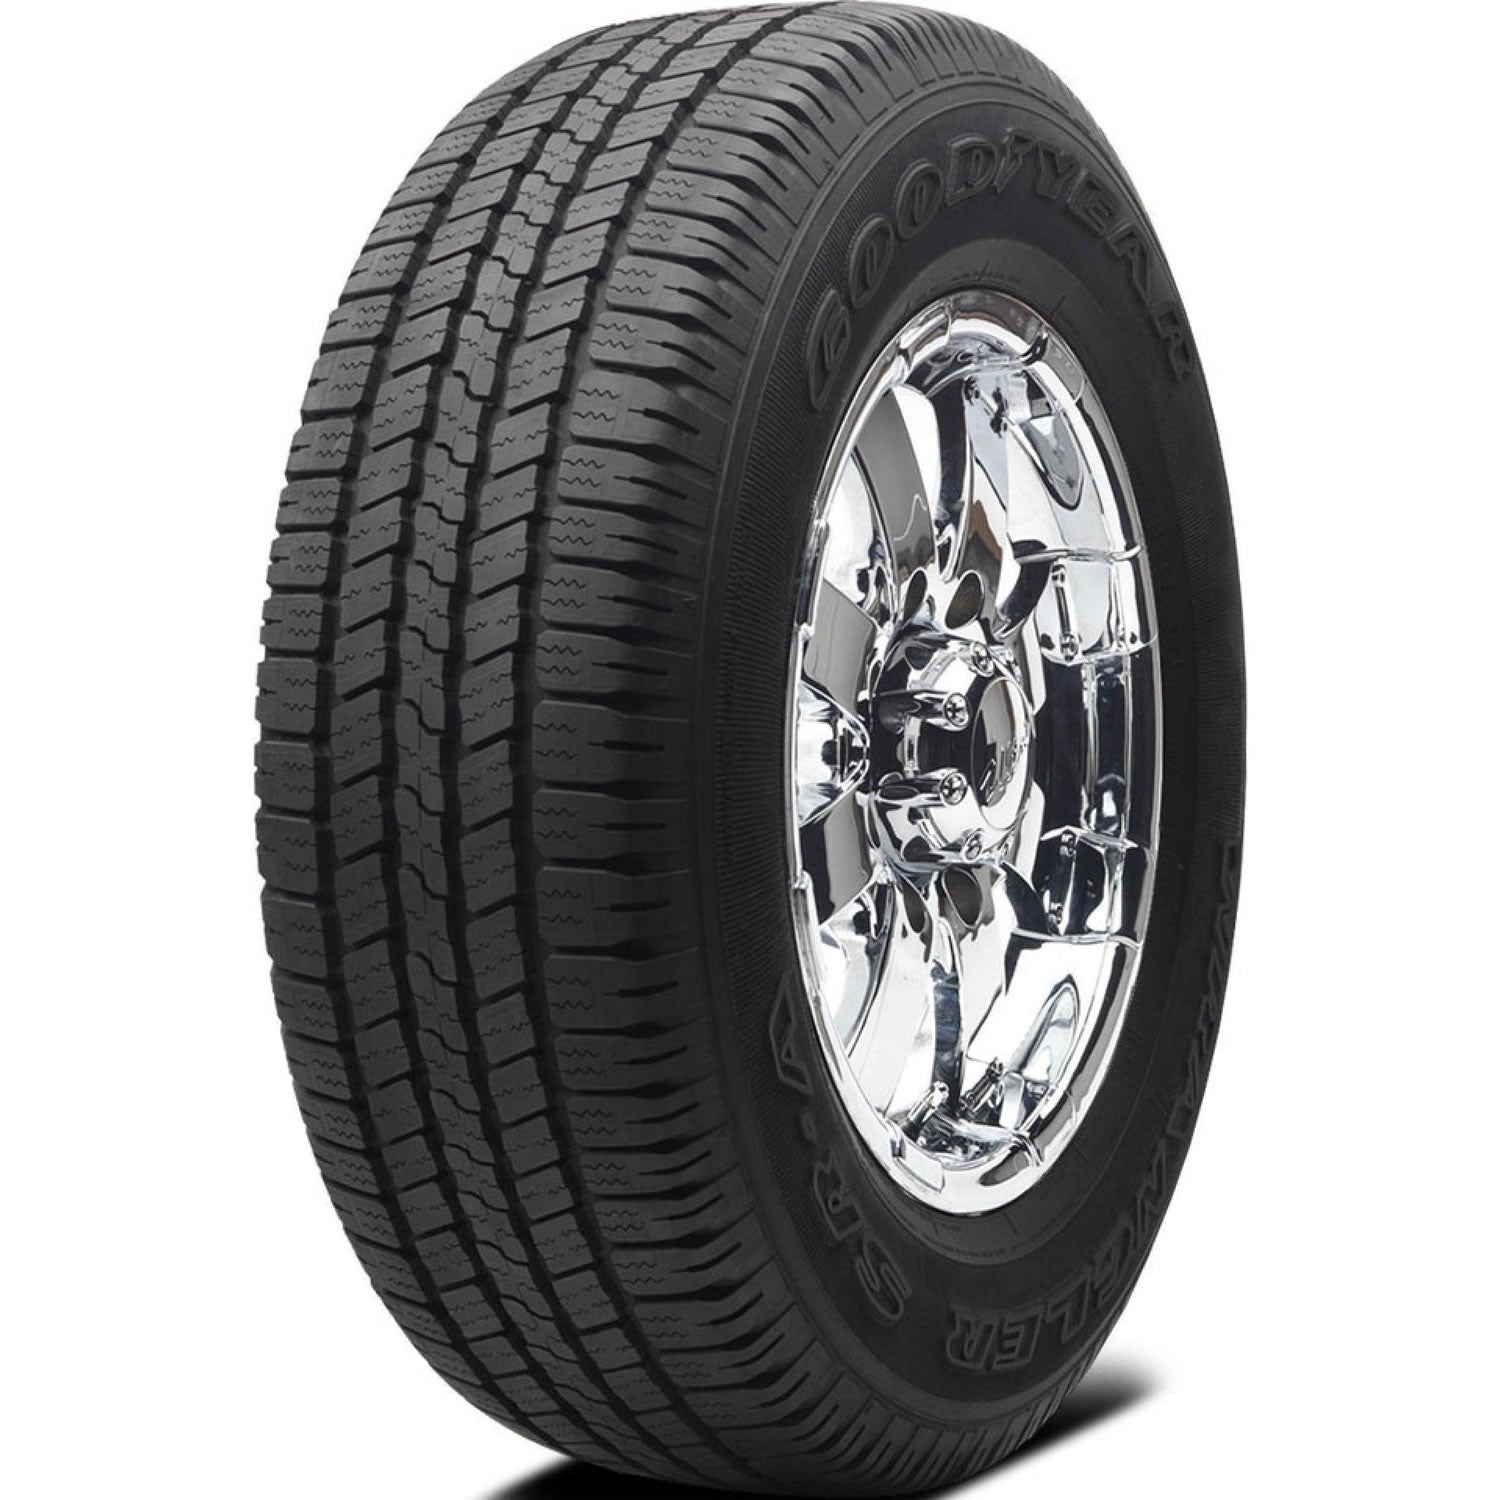 GOODYEAR WRANGLER SR-A LT265/75R16 (31.7X10.5R 16) Tires